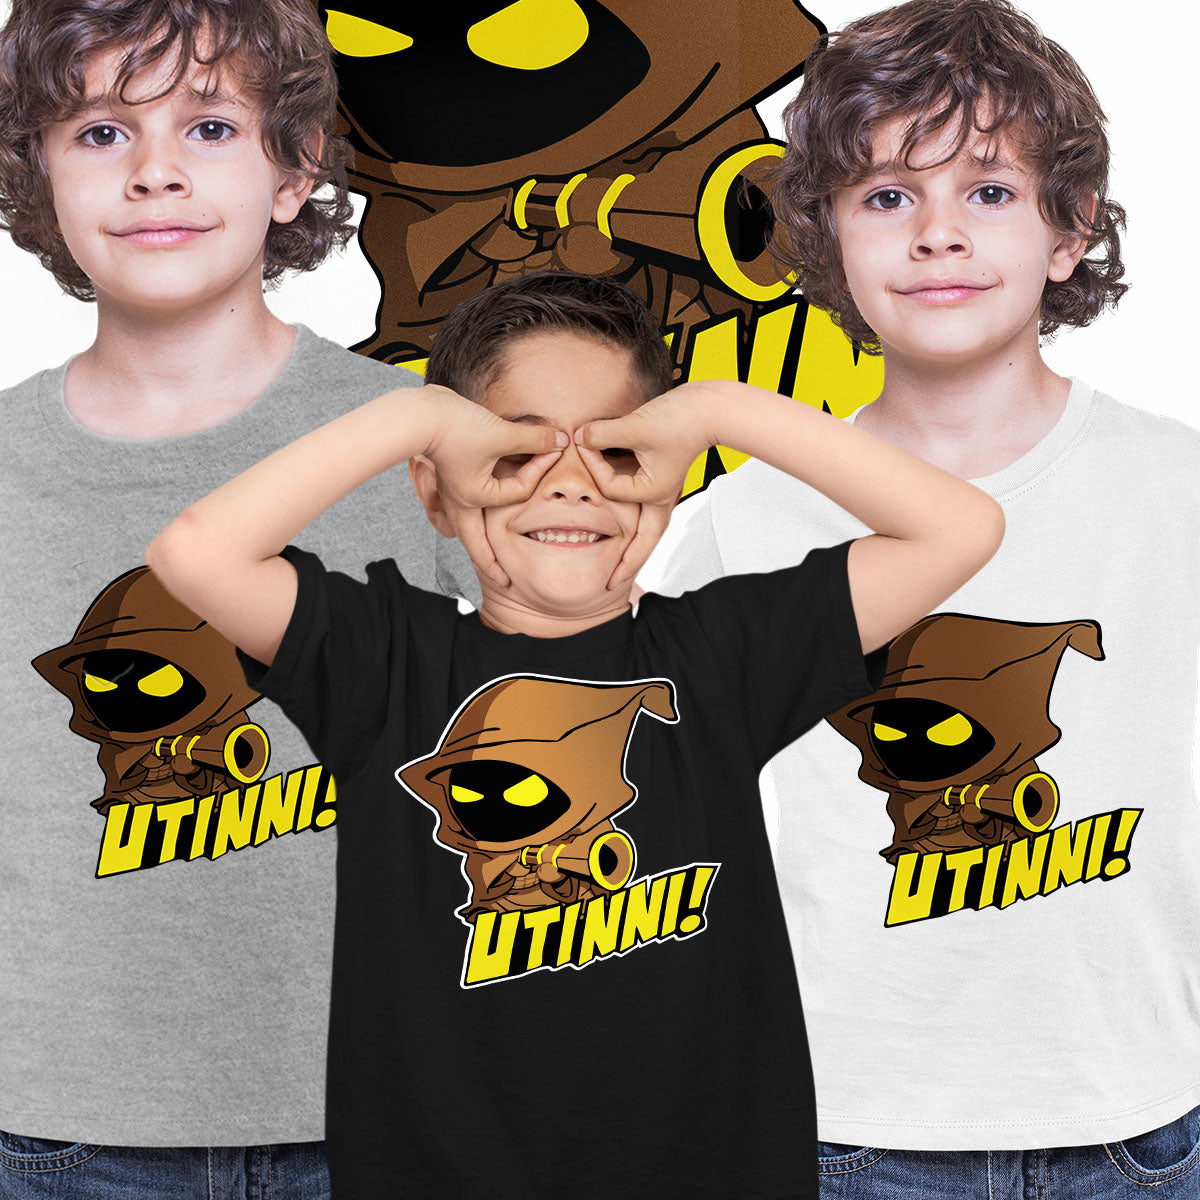 Utinni! Jawas Jawa Boba Fett Momento Tatooine TV Series Star Wars Saga T-shirt for Kids - Kuzi Tees